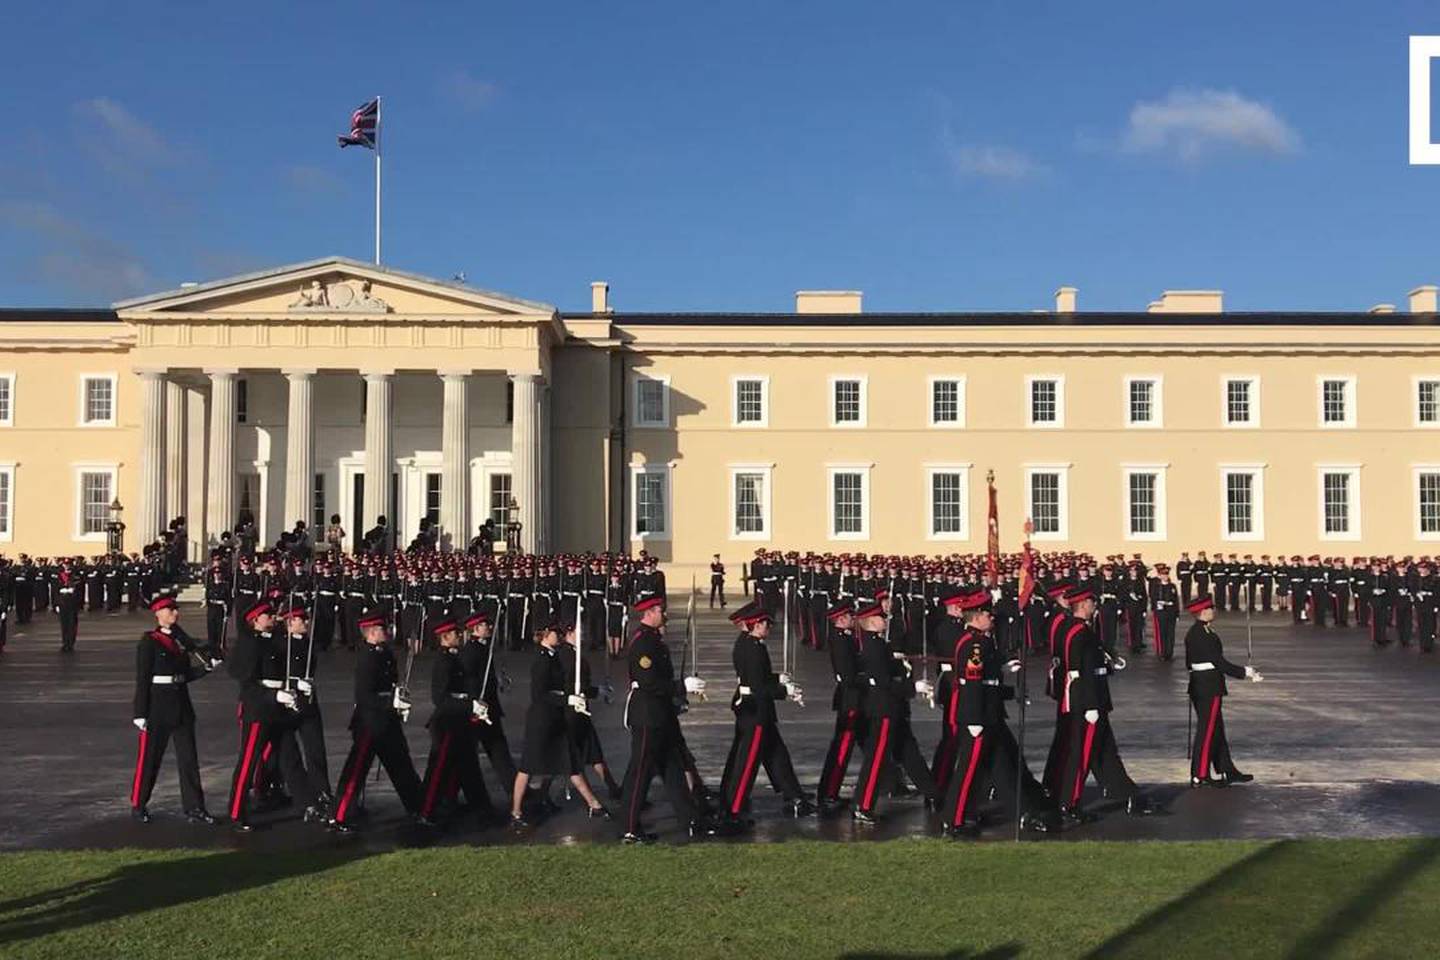 Royal Military Academy Sandhurst’s Sovereign’s Parade